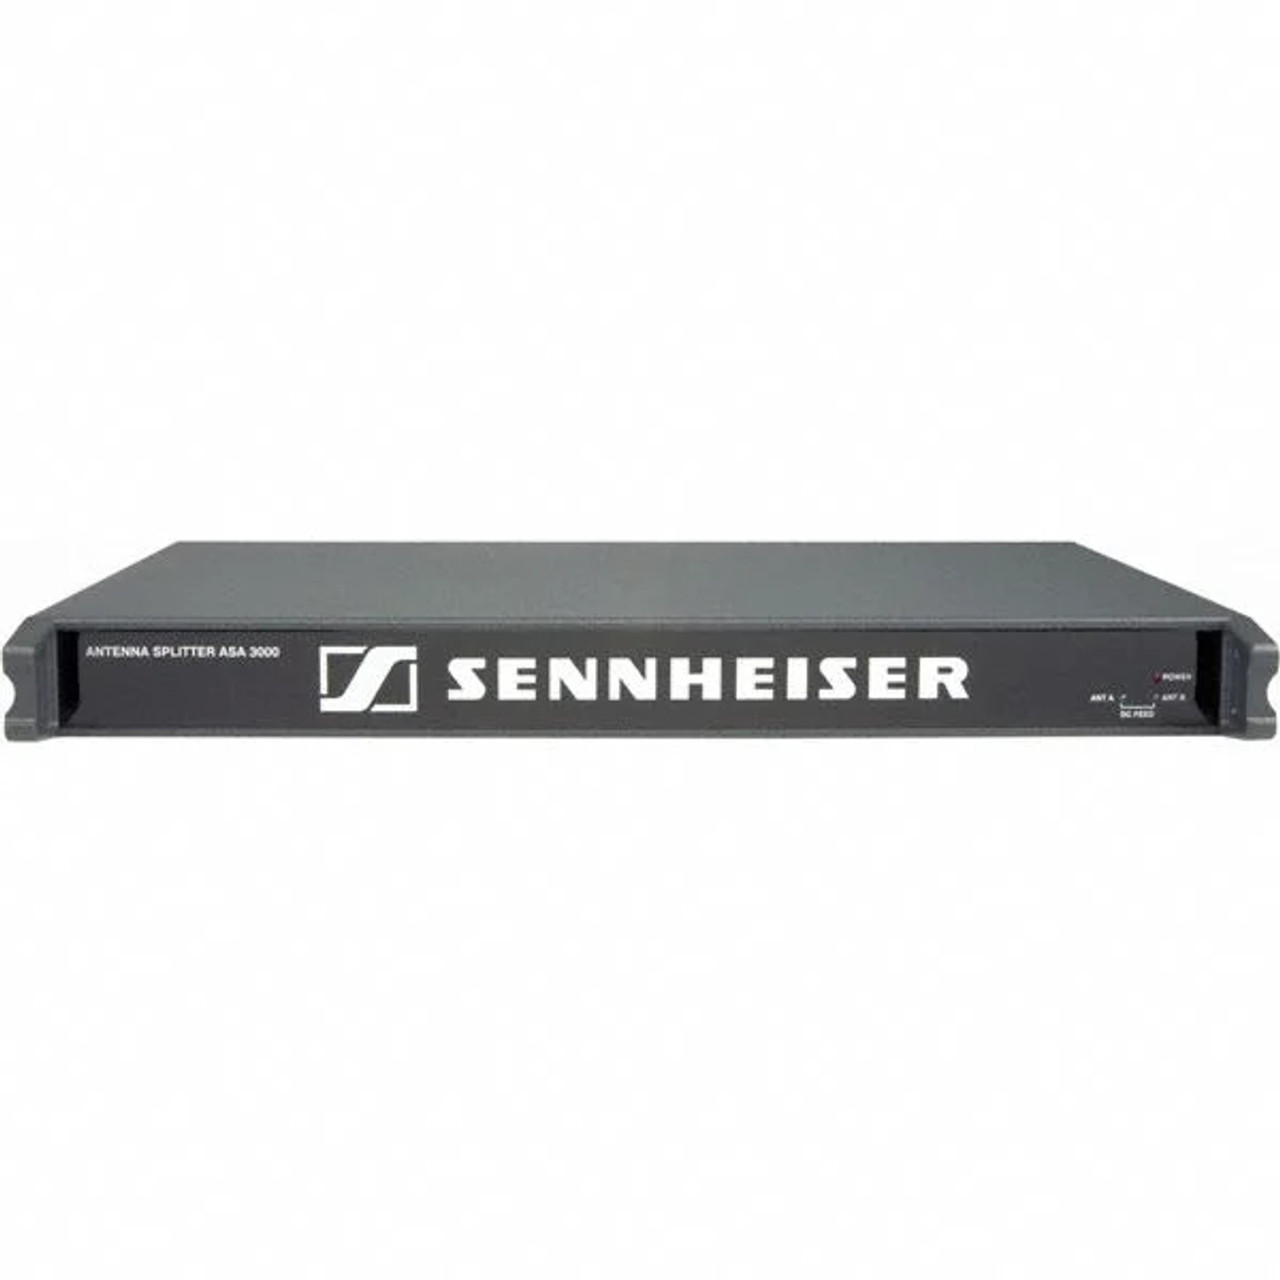 Sennheiser ASA3000 Dual 1:8 Active Antenna Splitter